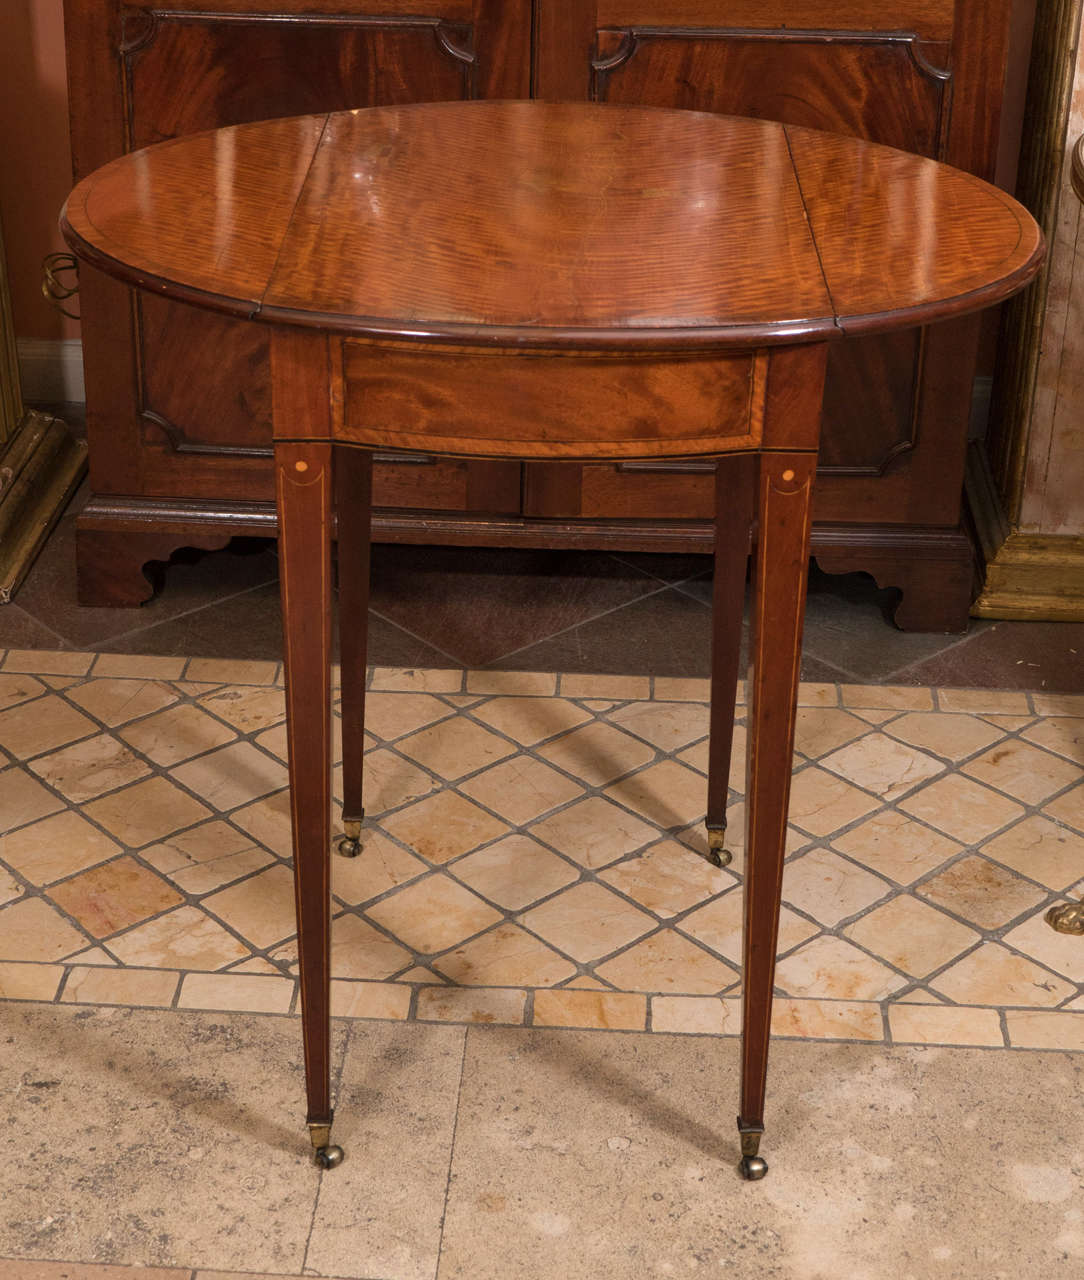 A fine George III (Hepplewhite) diminutive satinwood and rosewood crossbanded oval top pembroke table with slide.